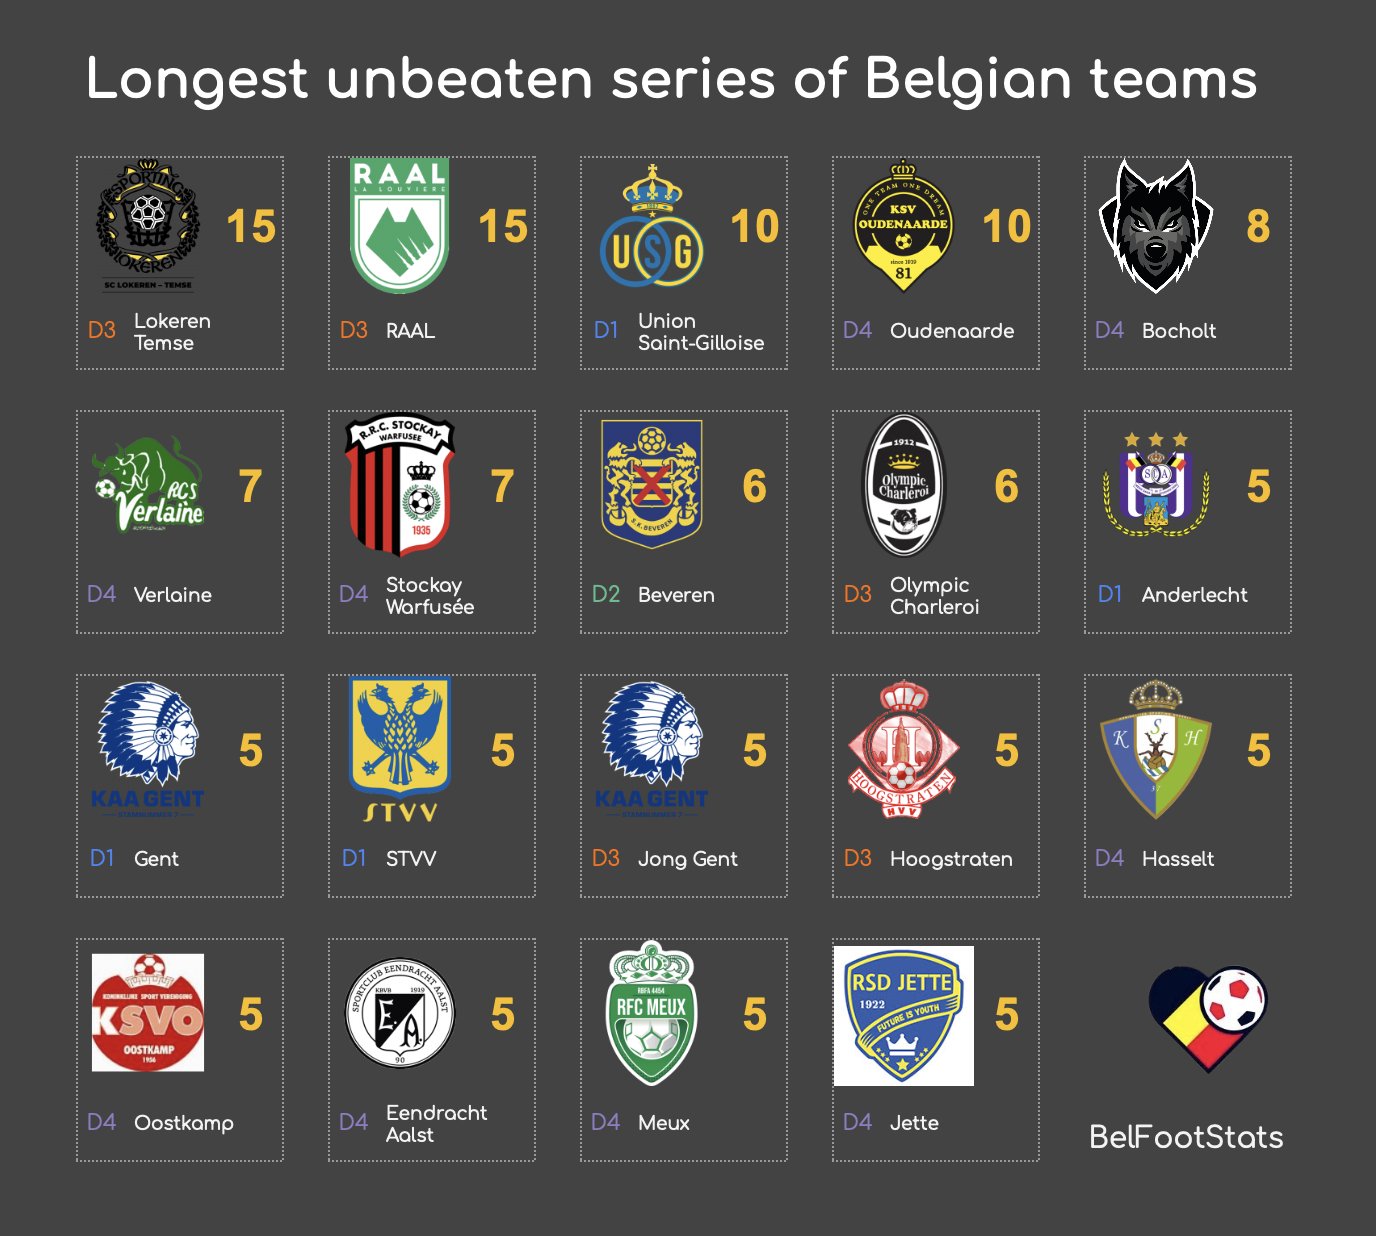 RWDM Table, Stats and Fixtures - Belgium